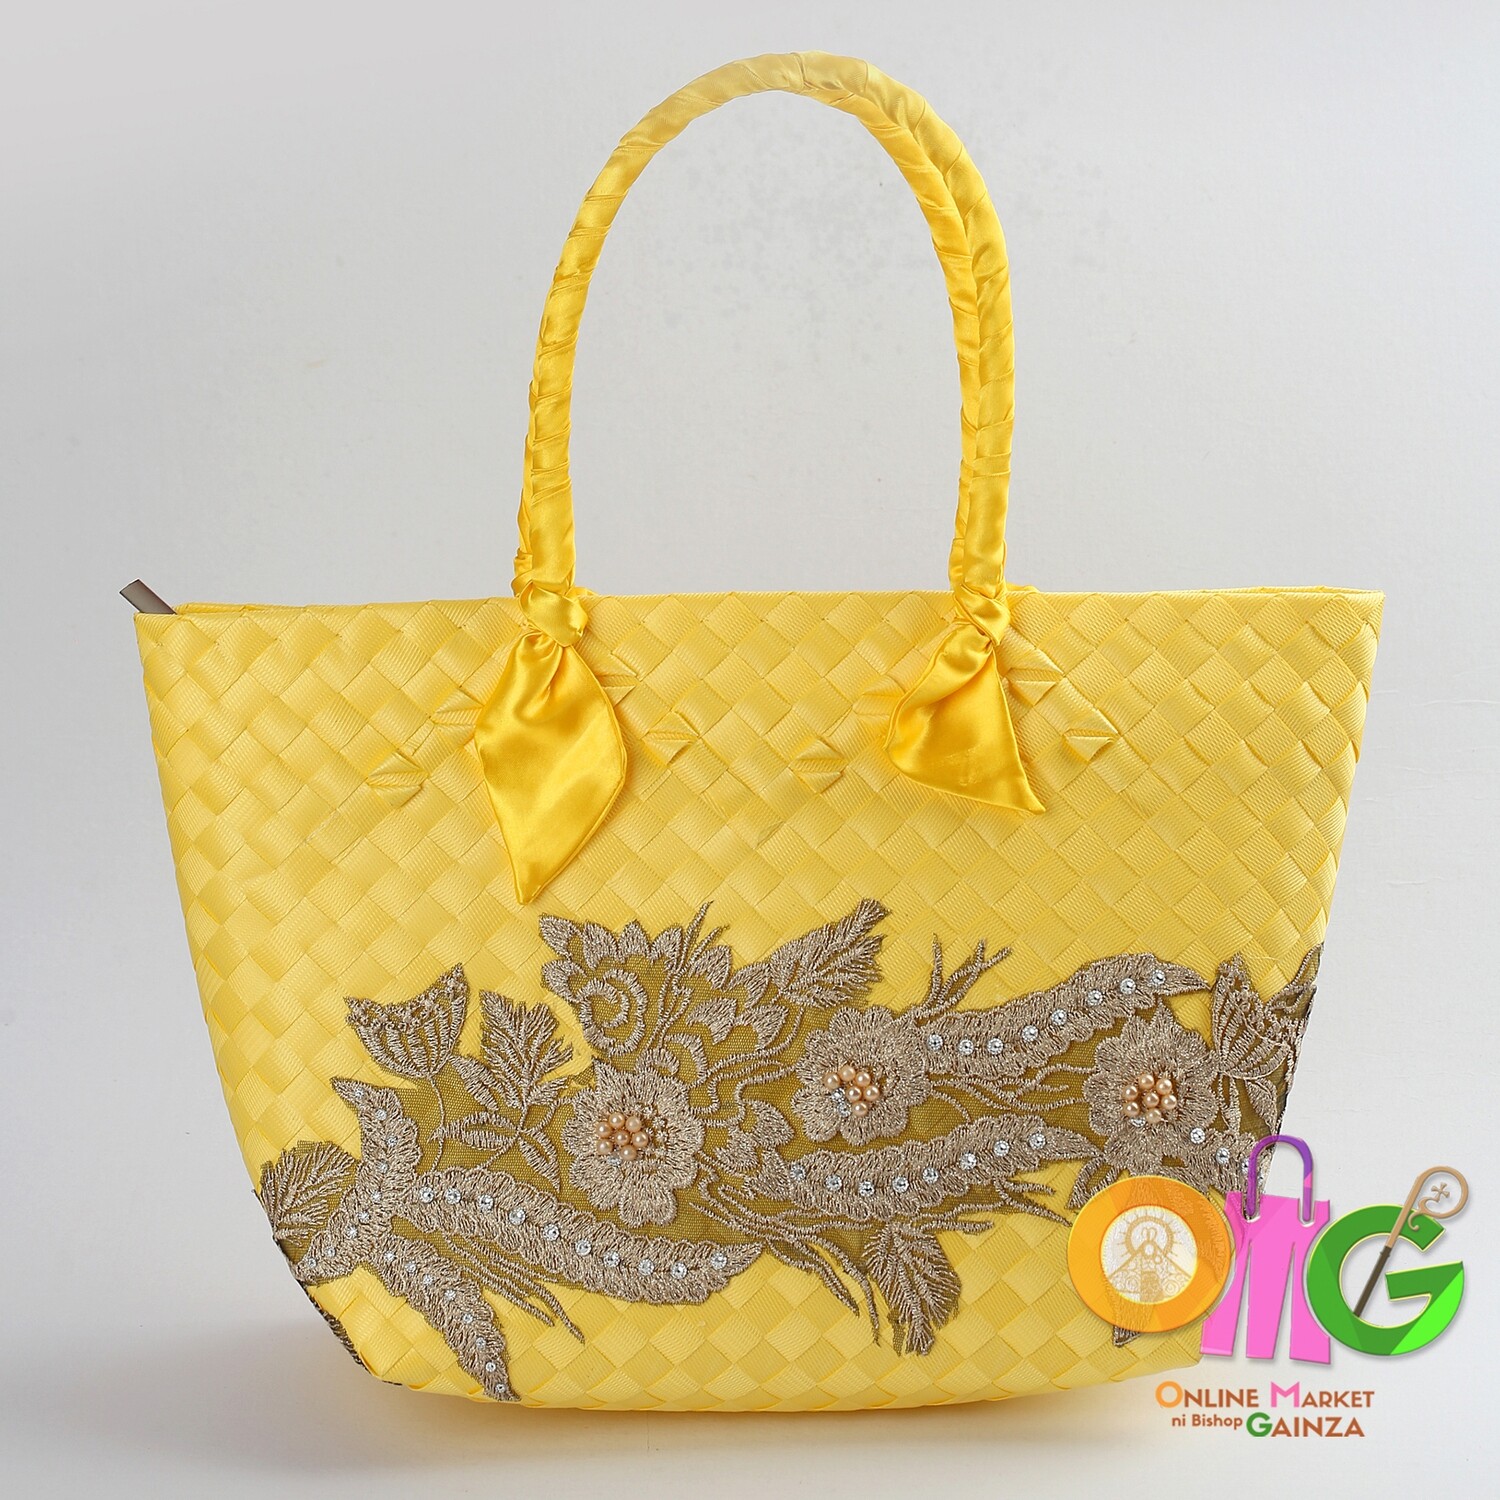 Jem's Bayongciala - Yellow Bag with Zipper